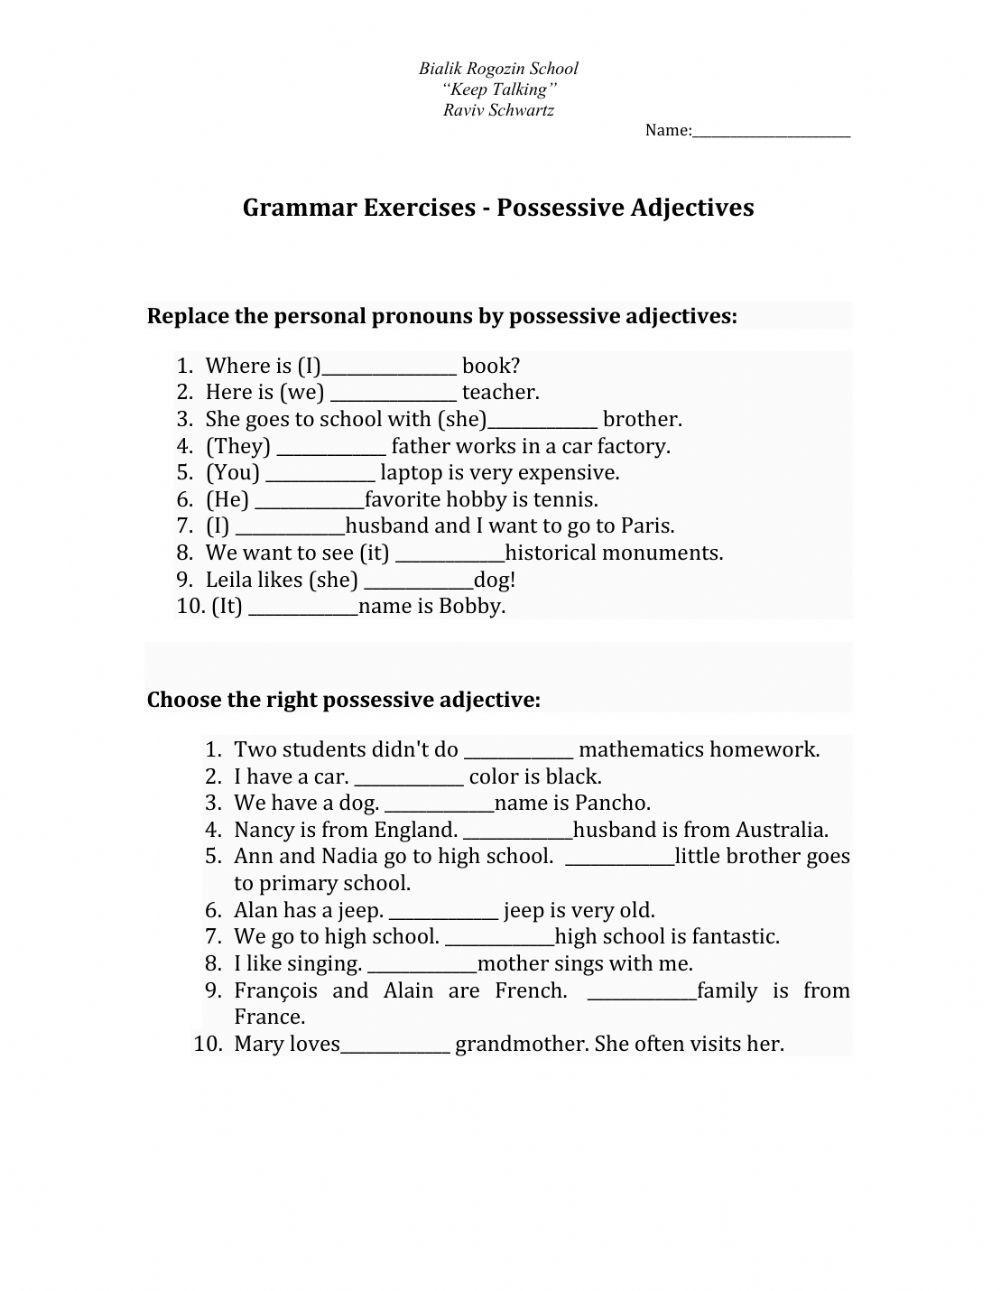 Possessive Pronouns-Adjectives